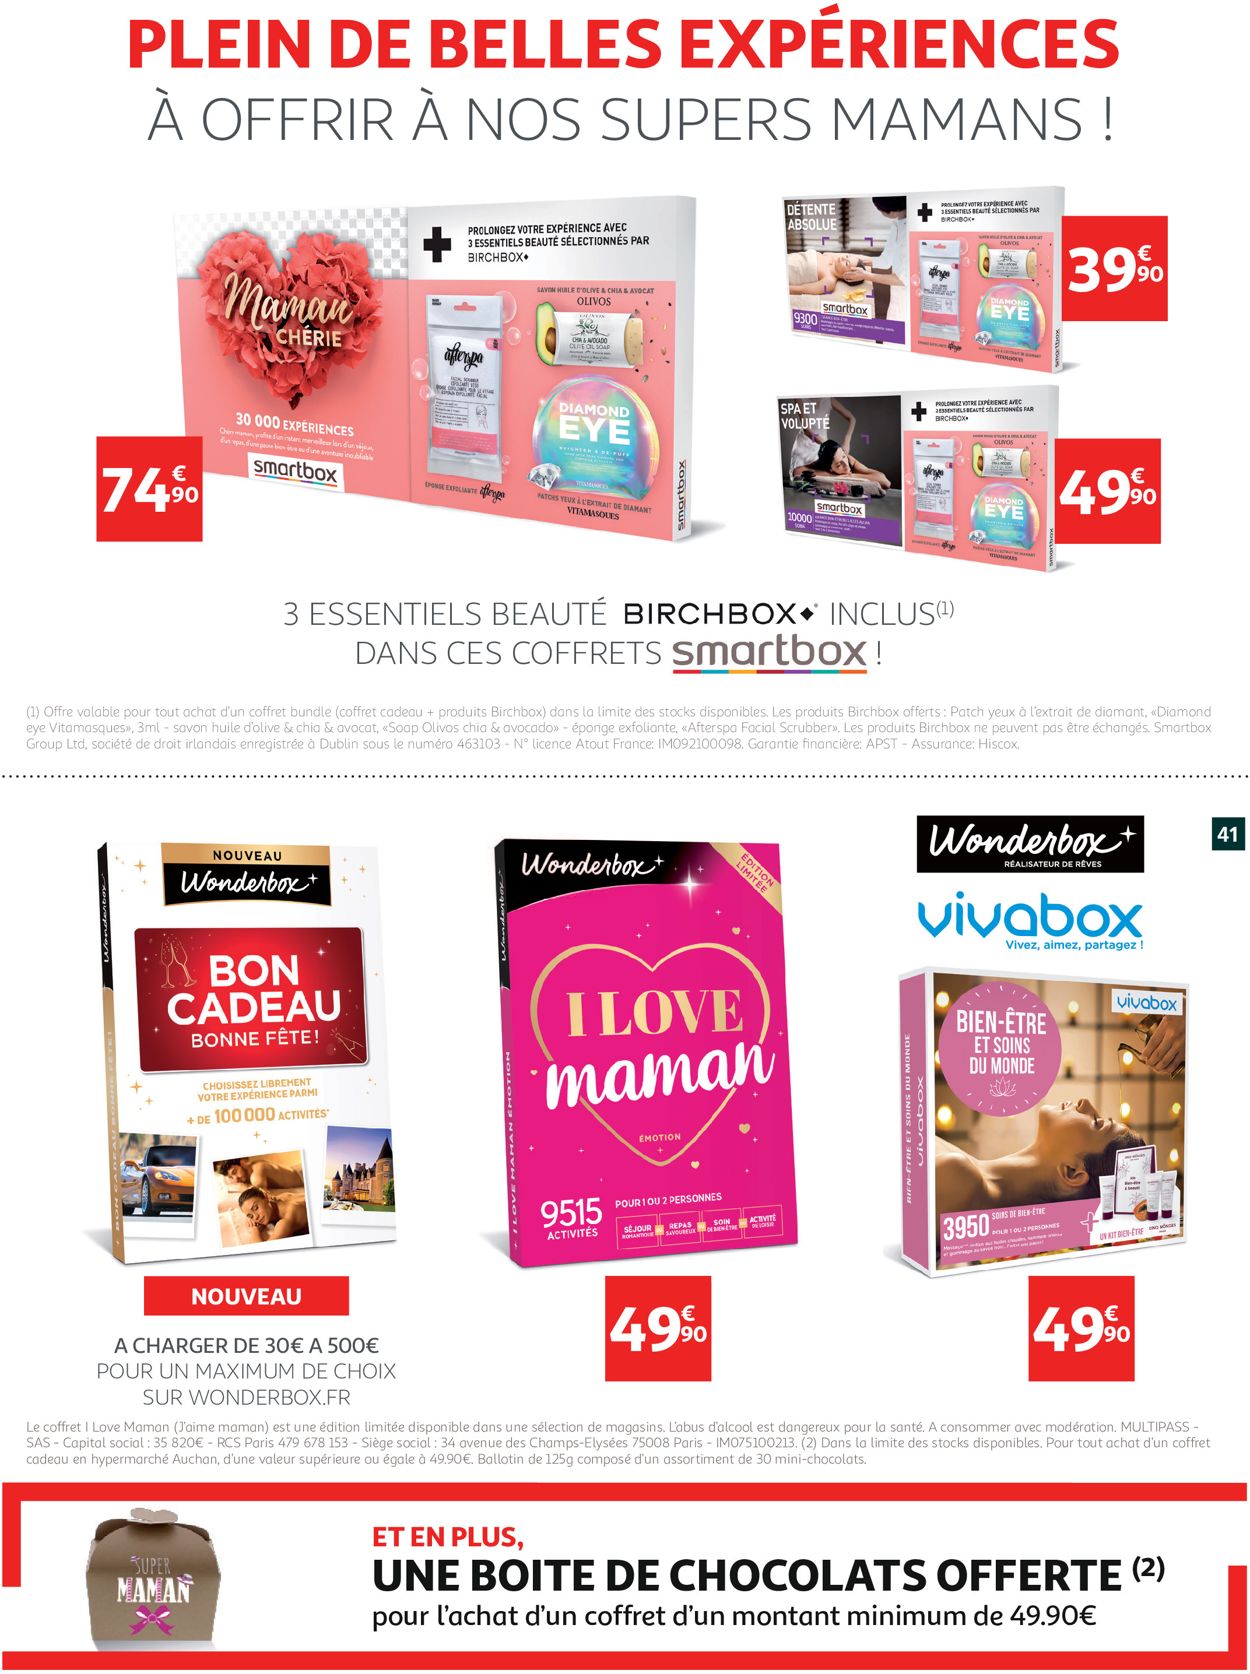 Auchan Catalogue - 26.05-02.06.2020 (Page 41)